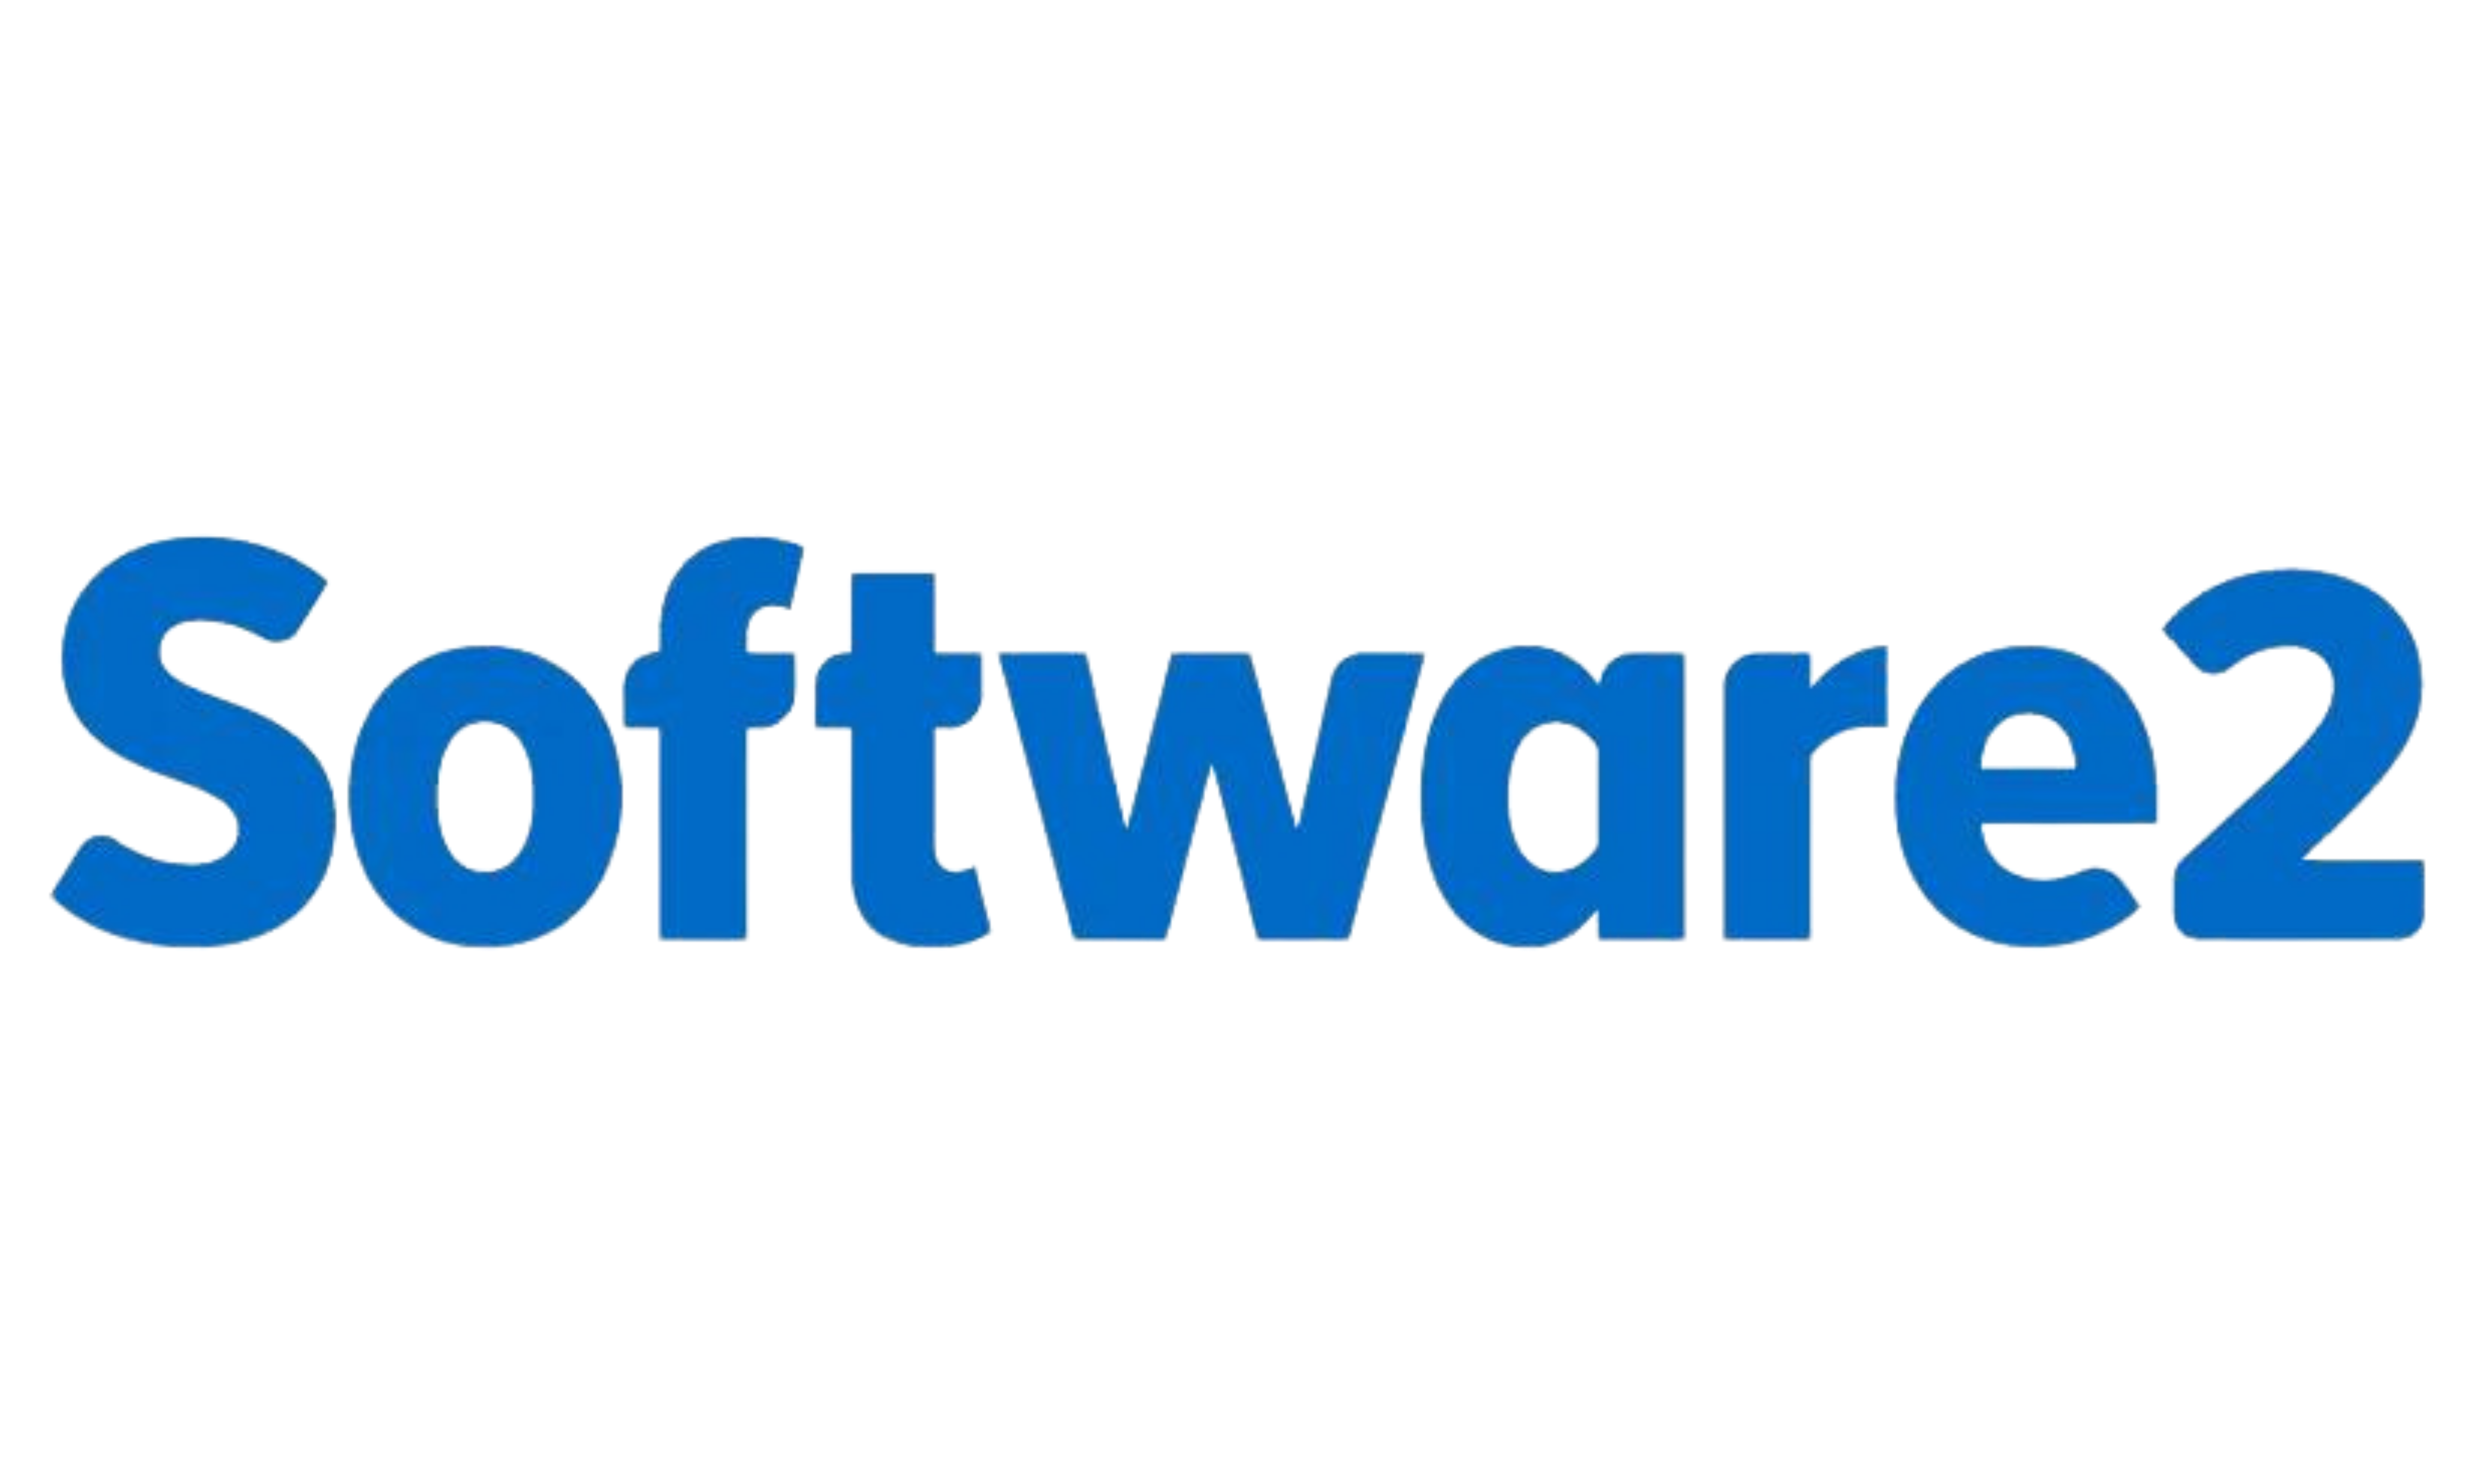 Software2